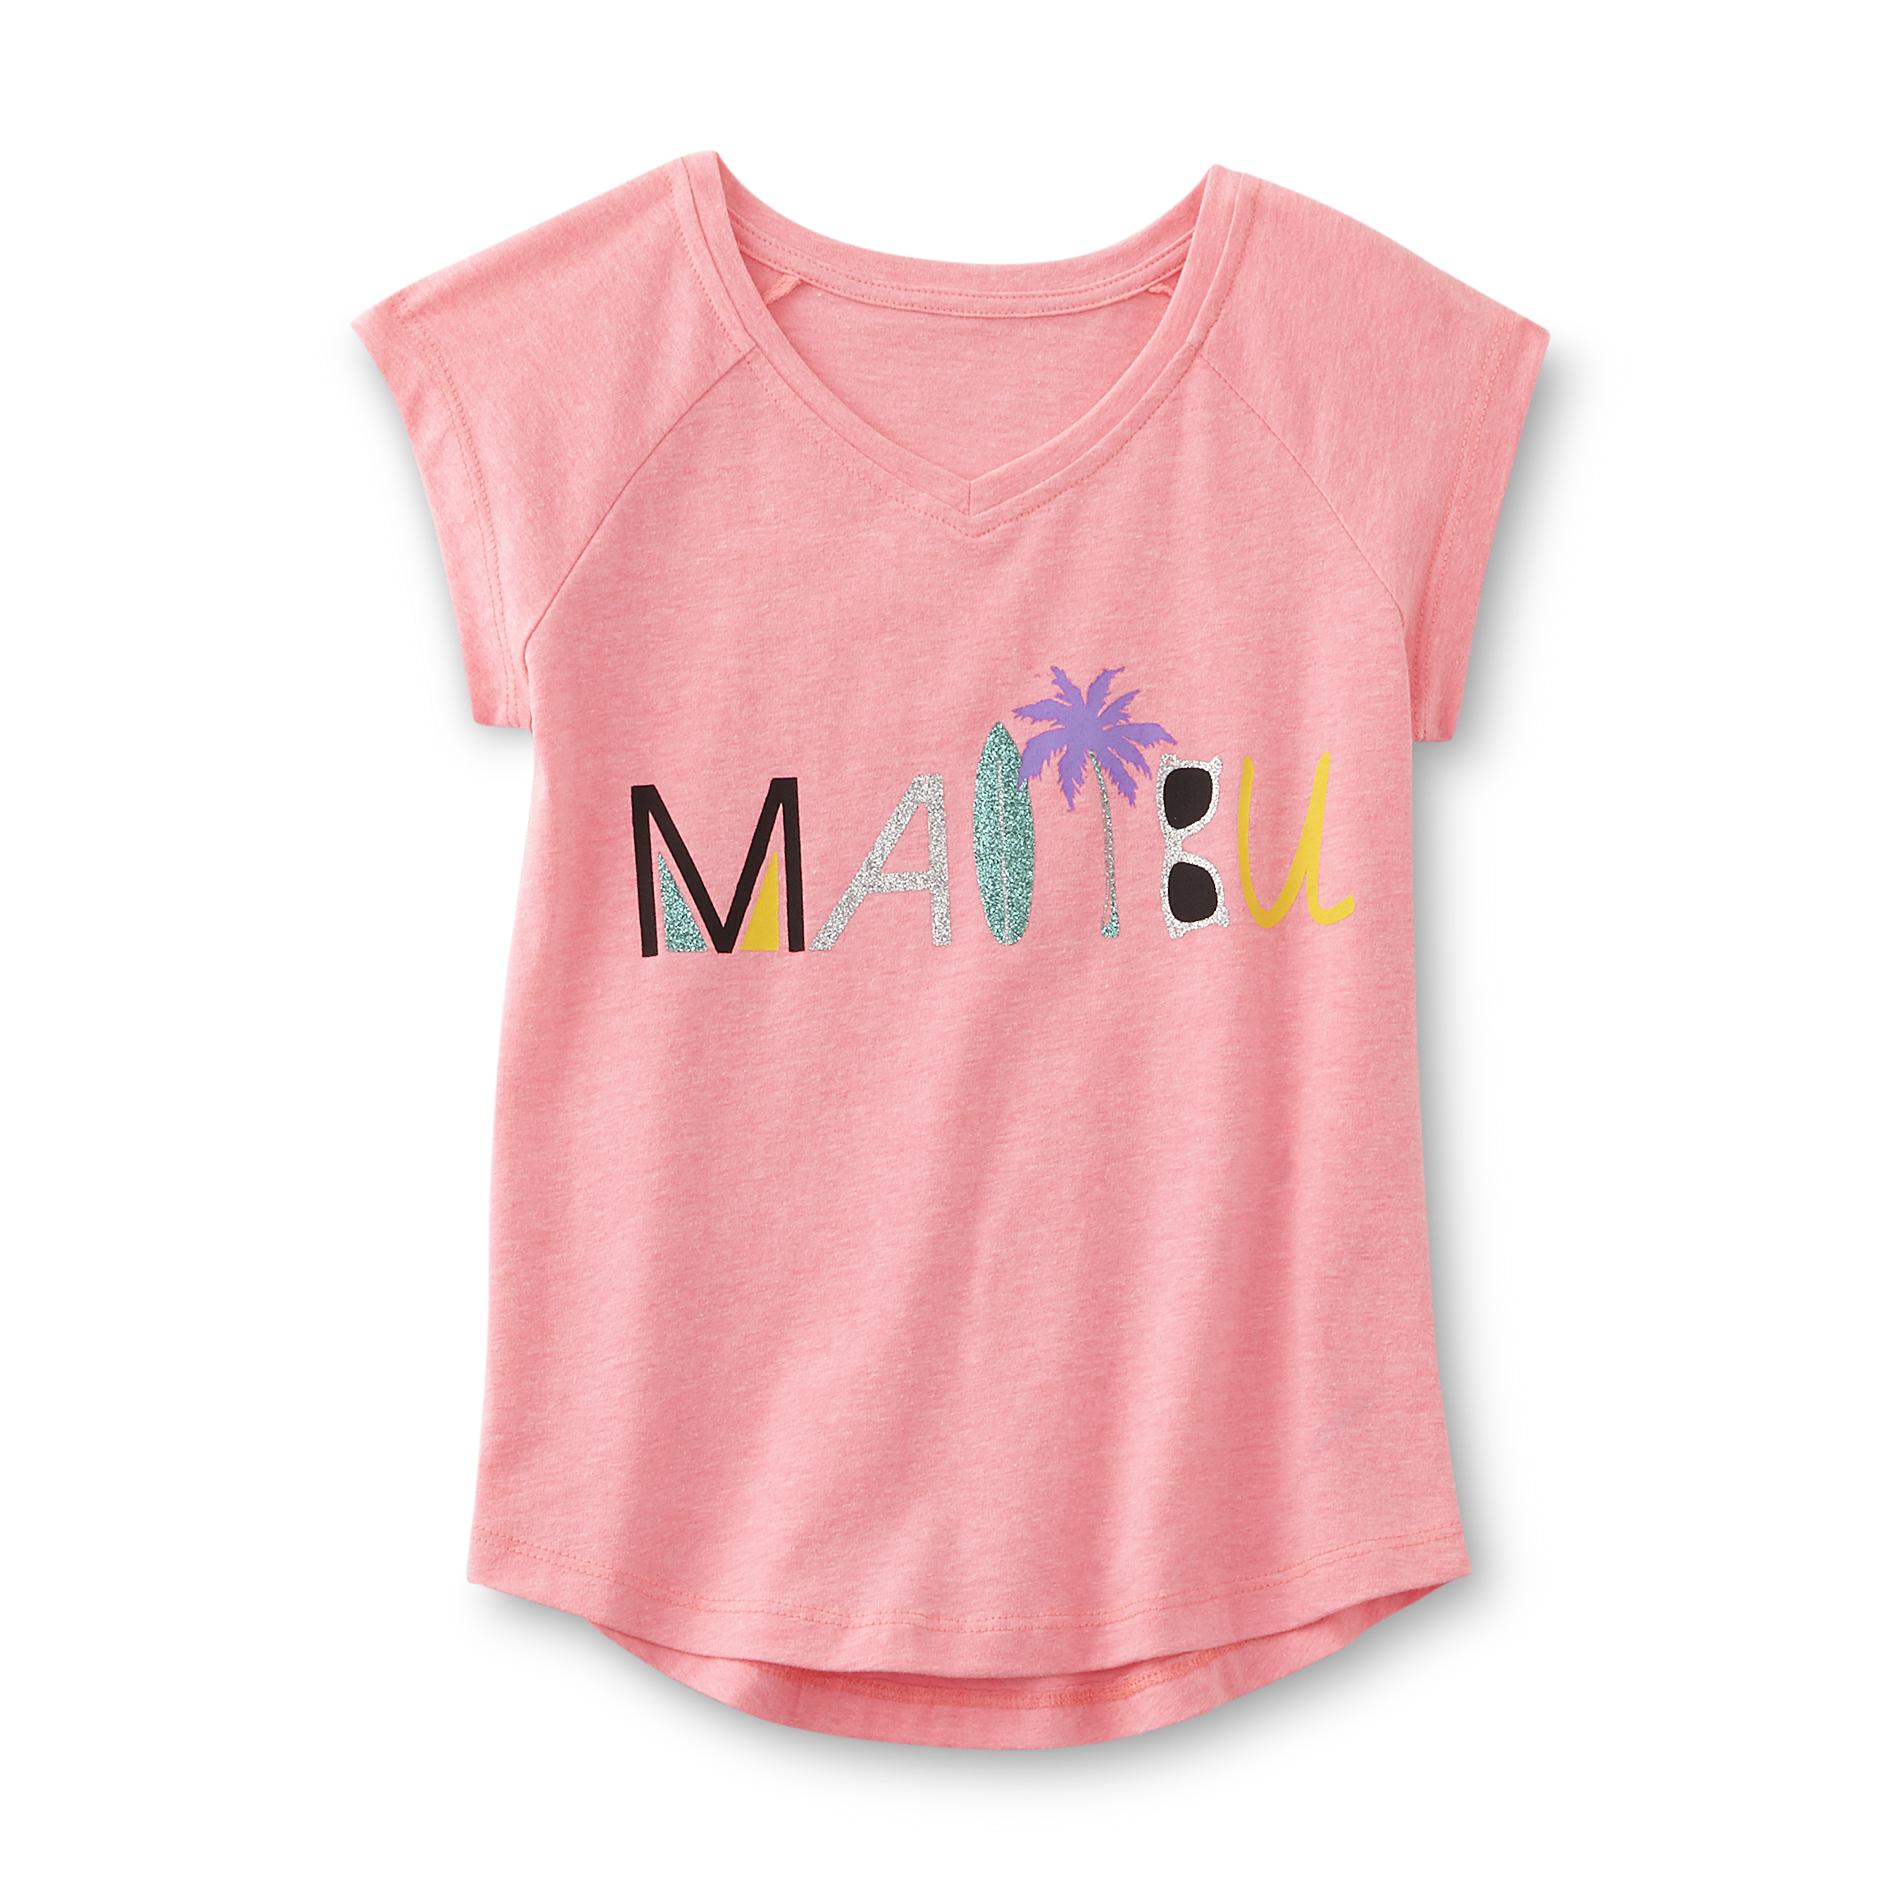 Piper Faves Girl's Graphic T-Shirt - Malibu